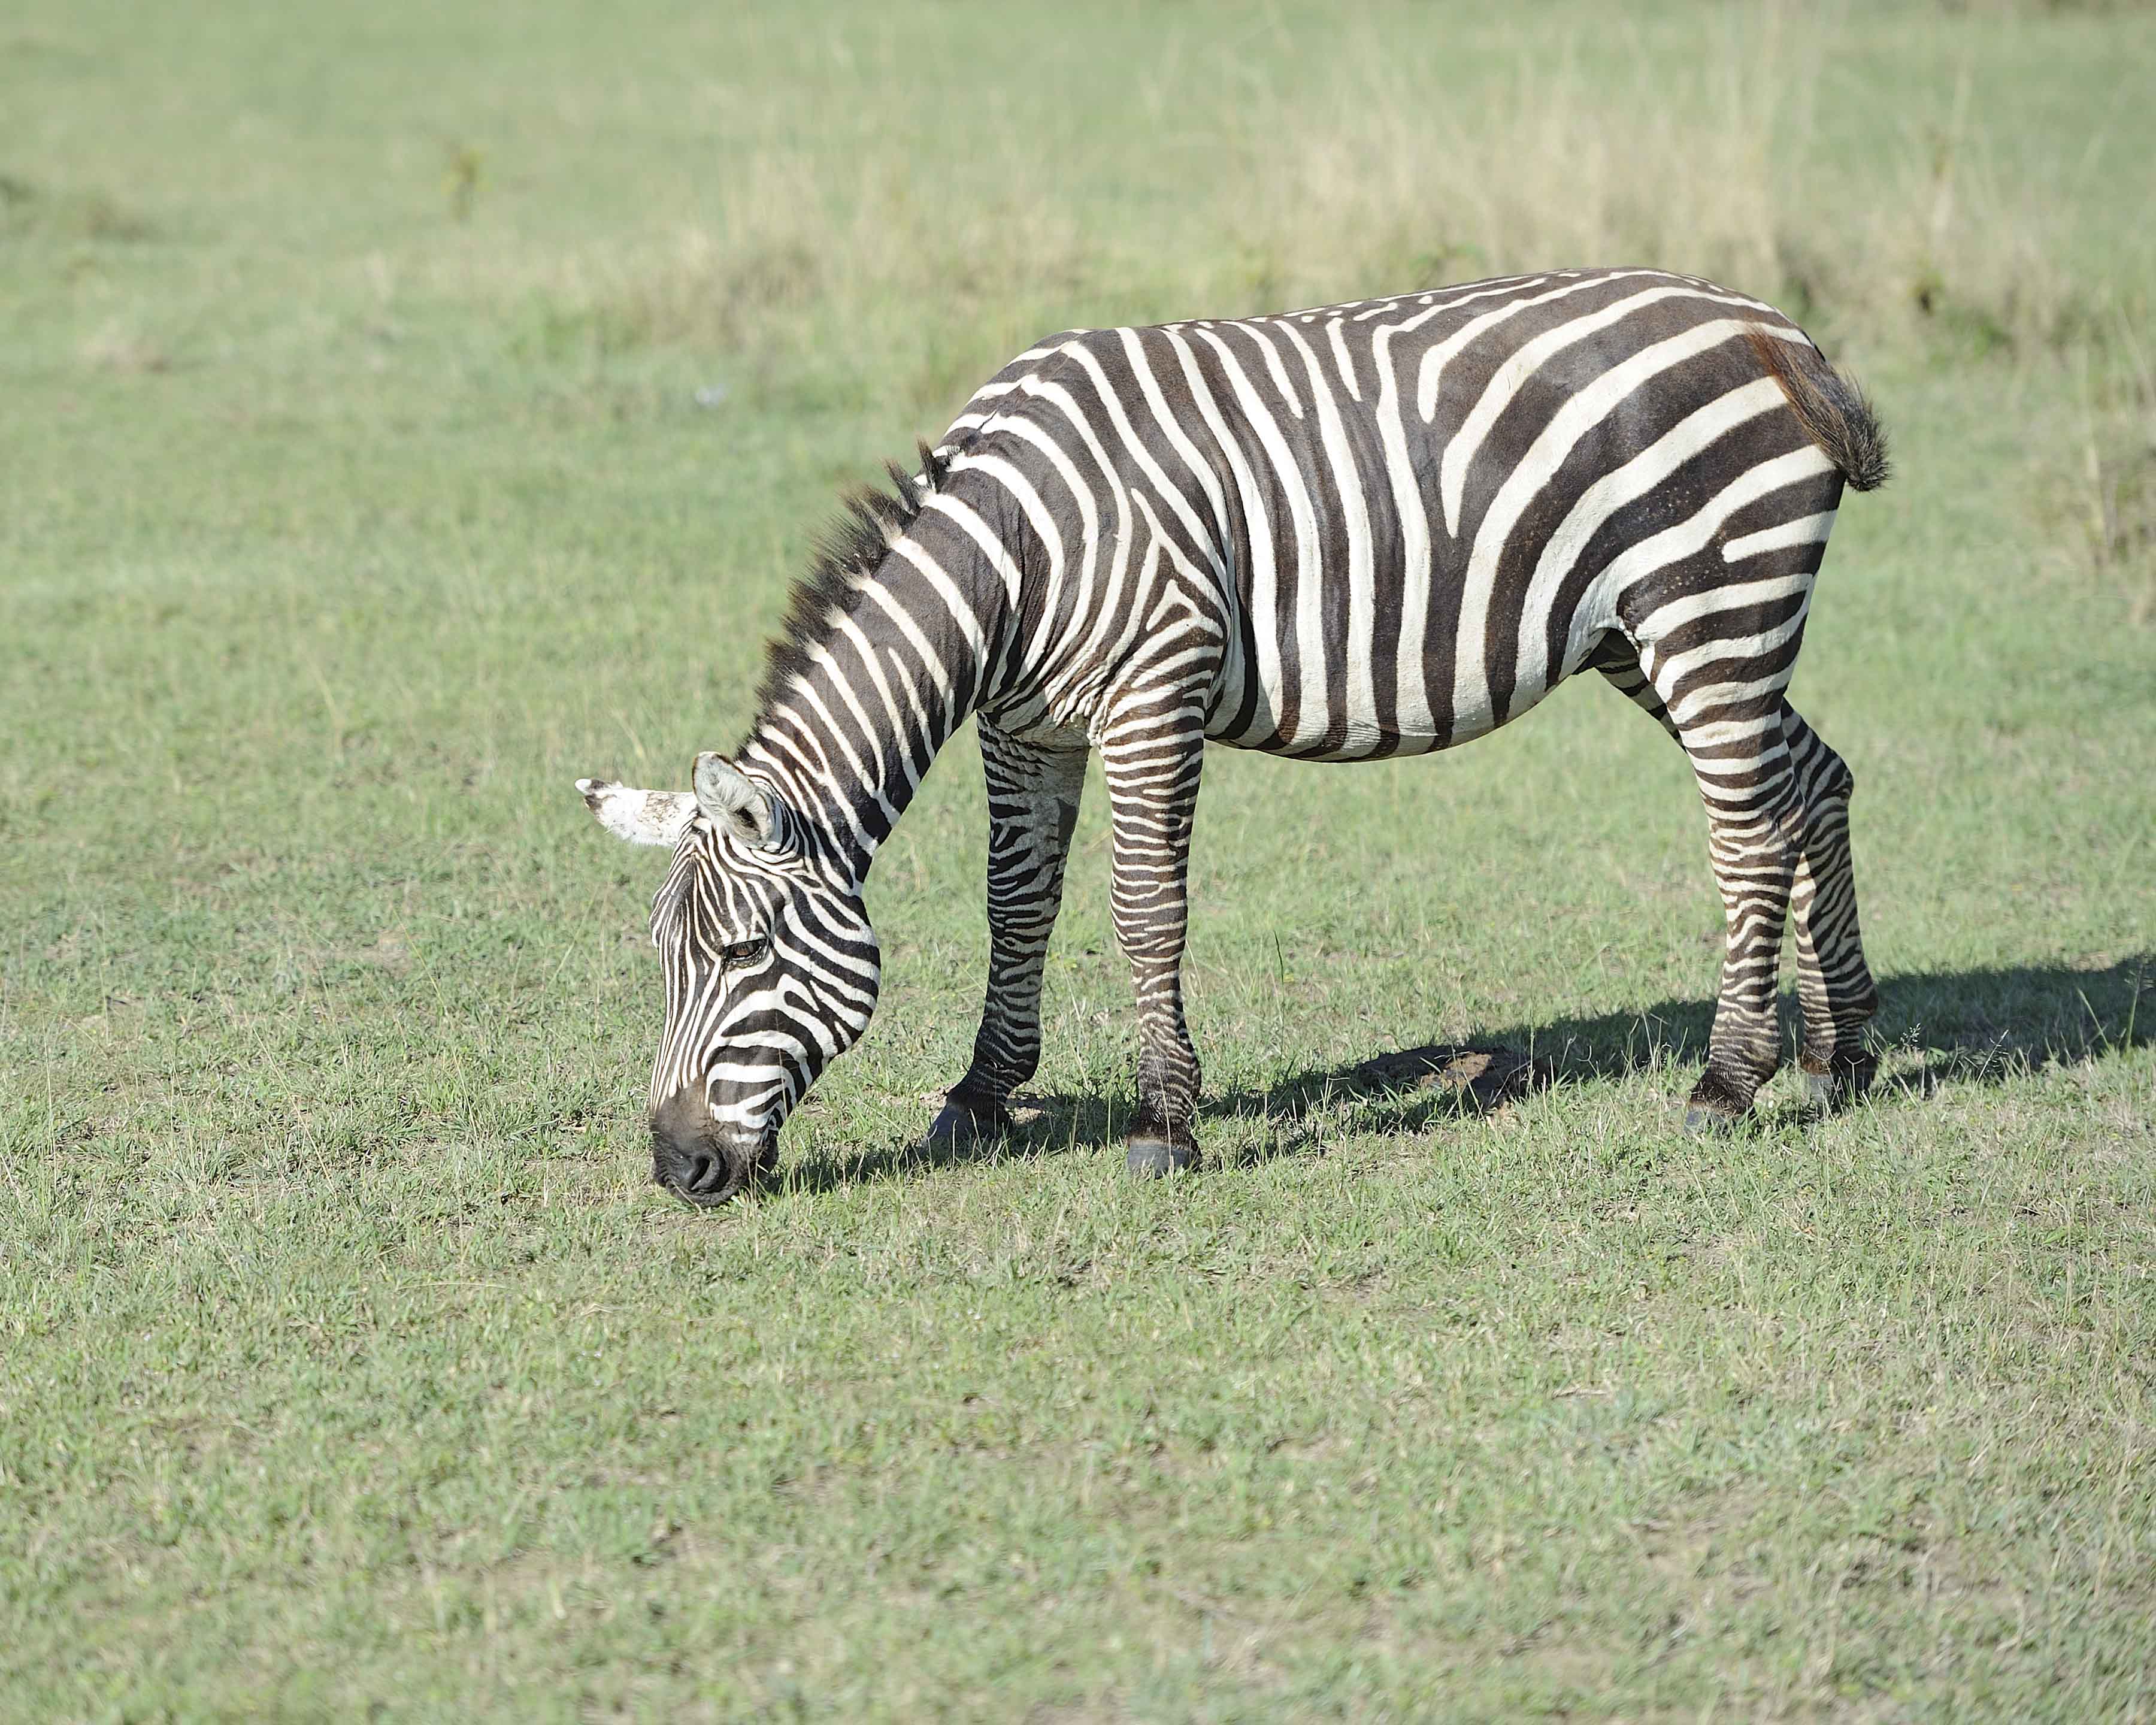 Zebra, Burchells-011013-Lake Nakuru National Park, Kenya-#2313.jpg